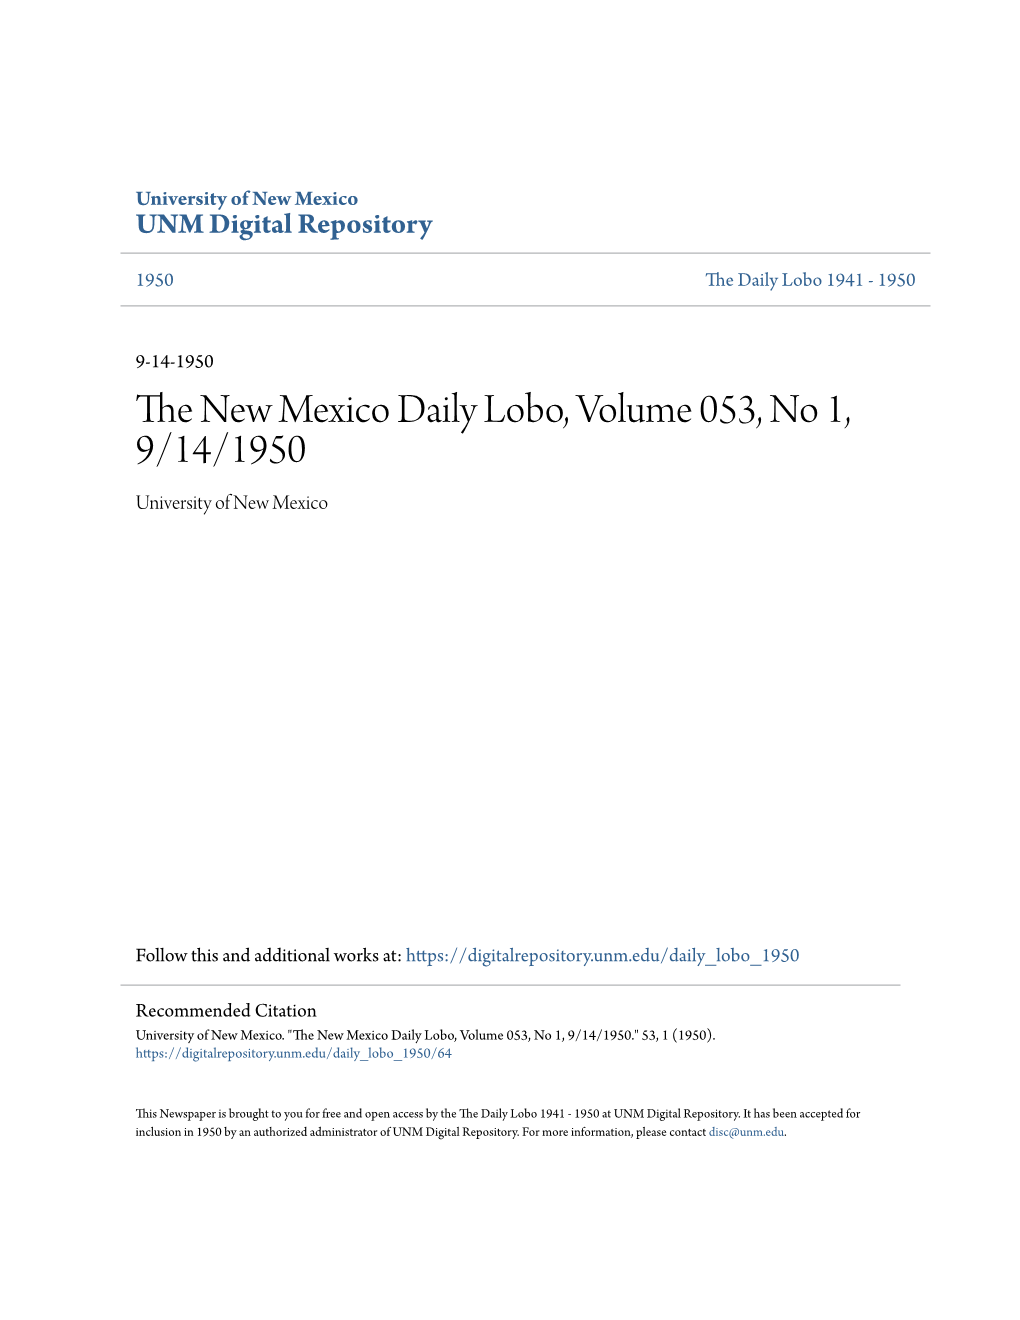 The New Mexico Daily Lobo, Volume 053, No 1, 9/14/1950